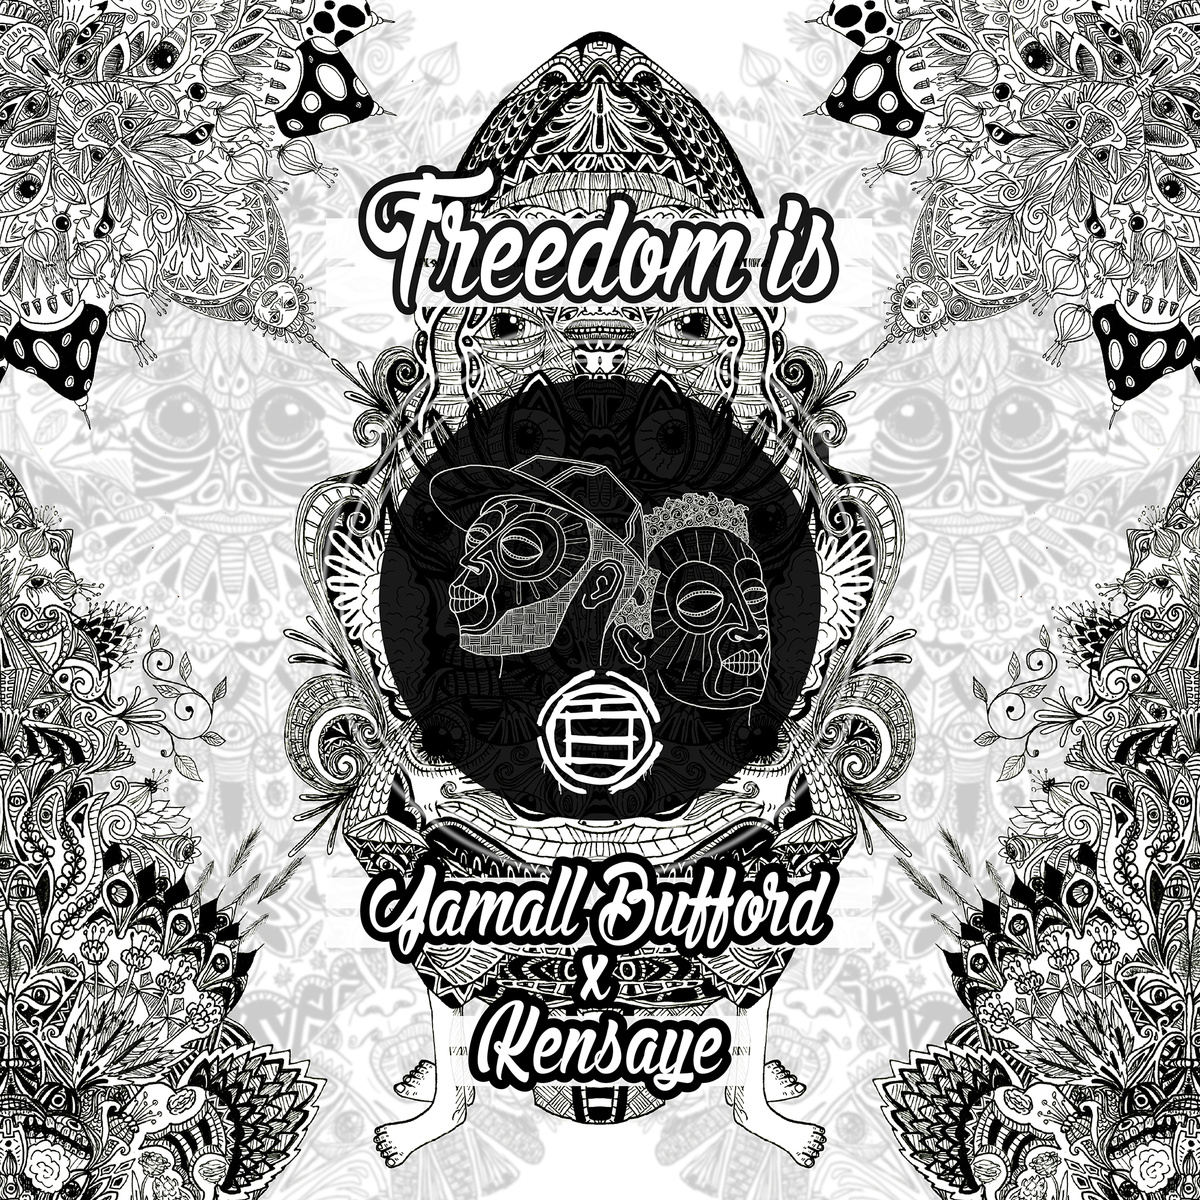 Jamall Bufford & Kensaye - "Freedom Is" (Release)